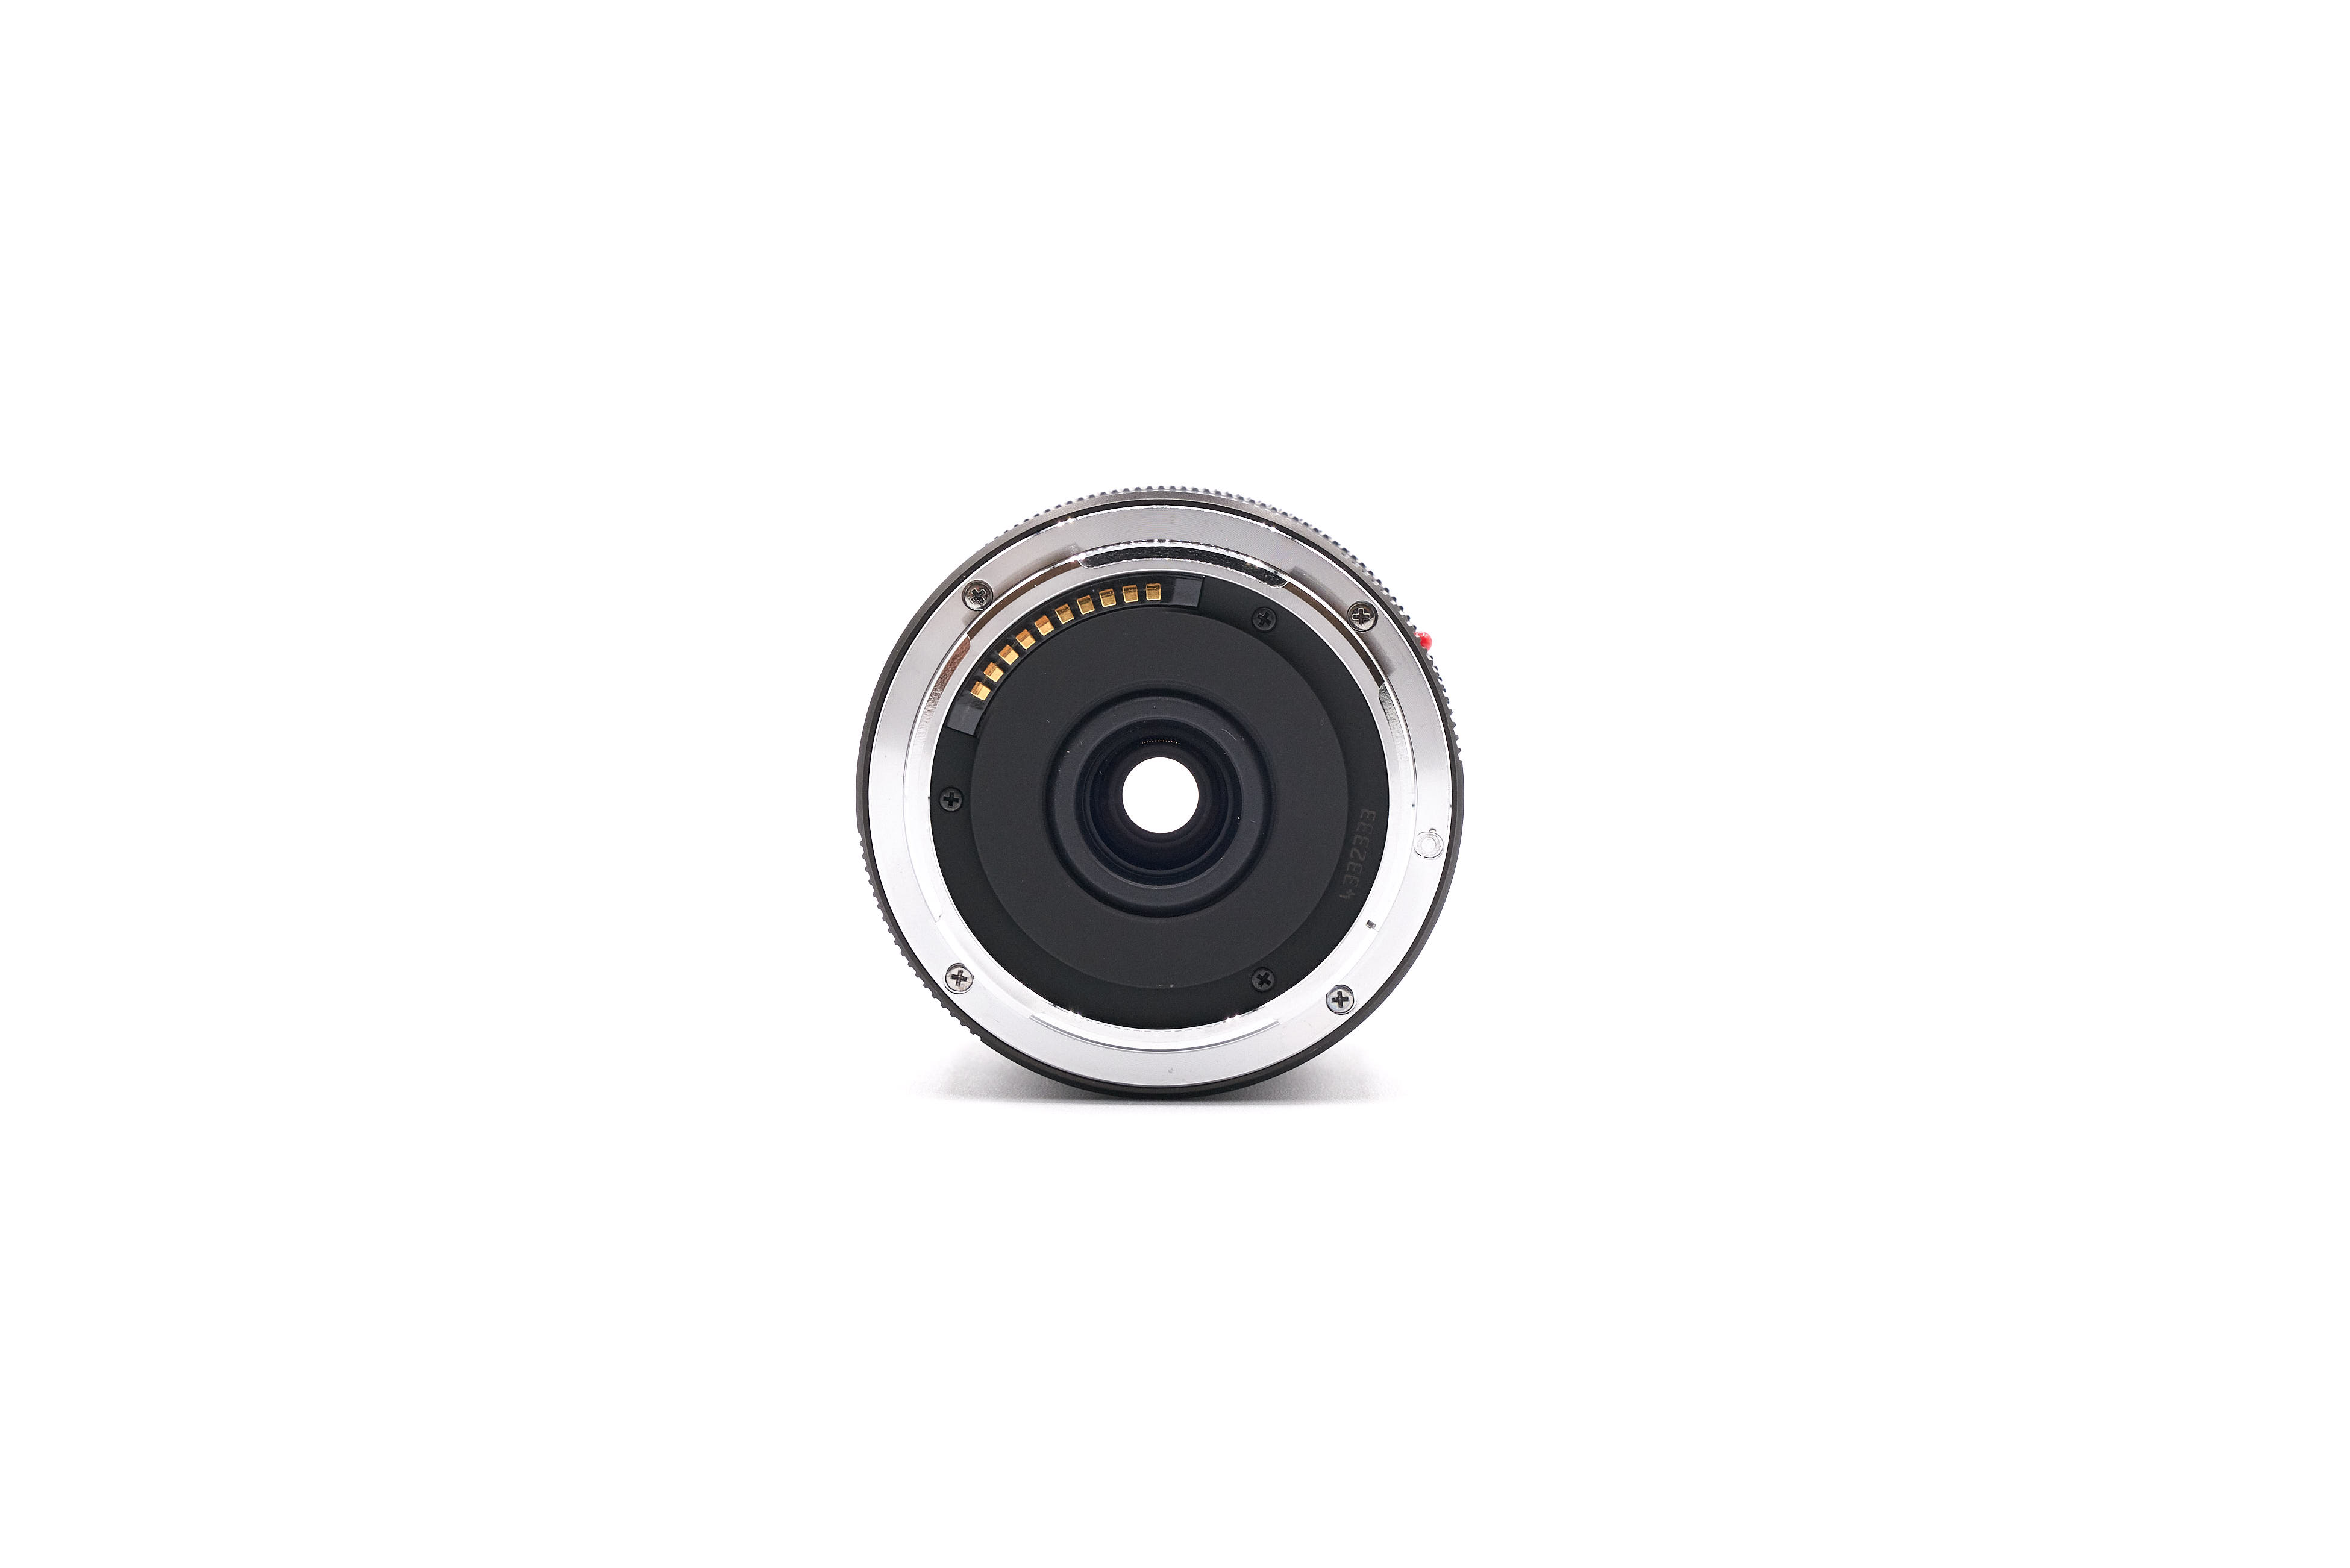 Leica Vario-Elmar-TL 18-56mm f/3.5-5.6 11080